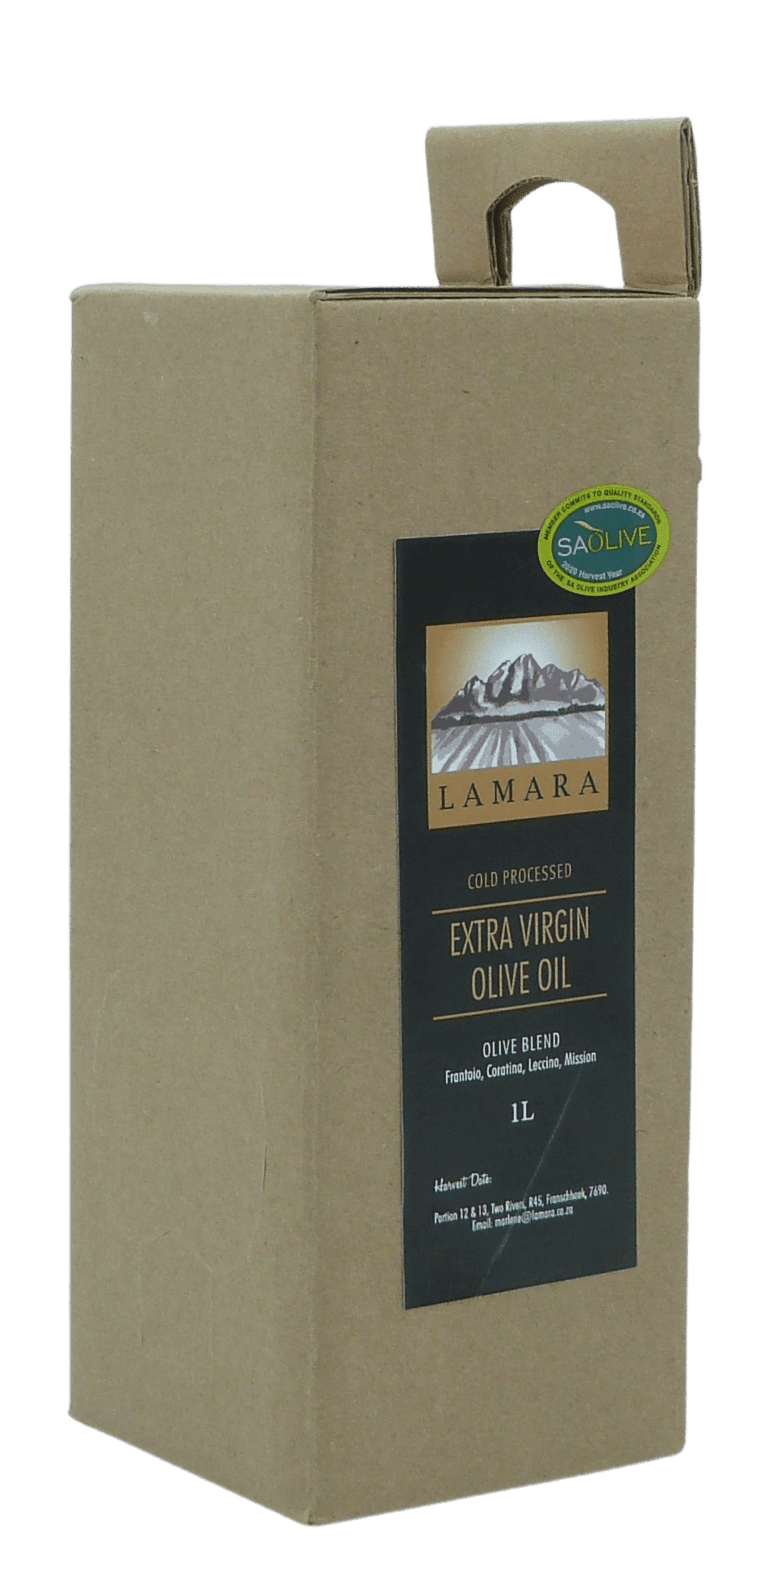 Capeandgrapes Zuid-Afrikaanse wijnen Lamara Extra Virgin Olive Oil BIB 1l